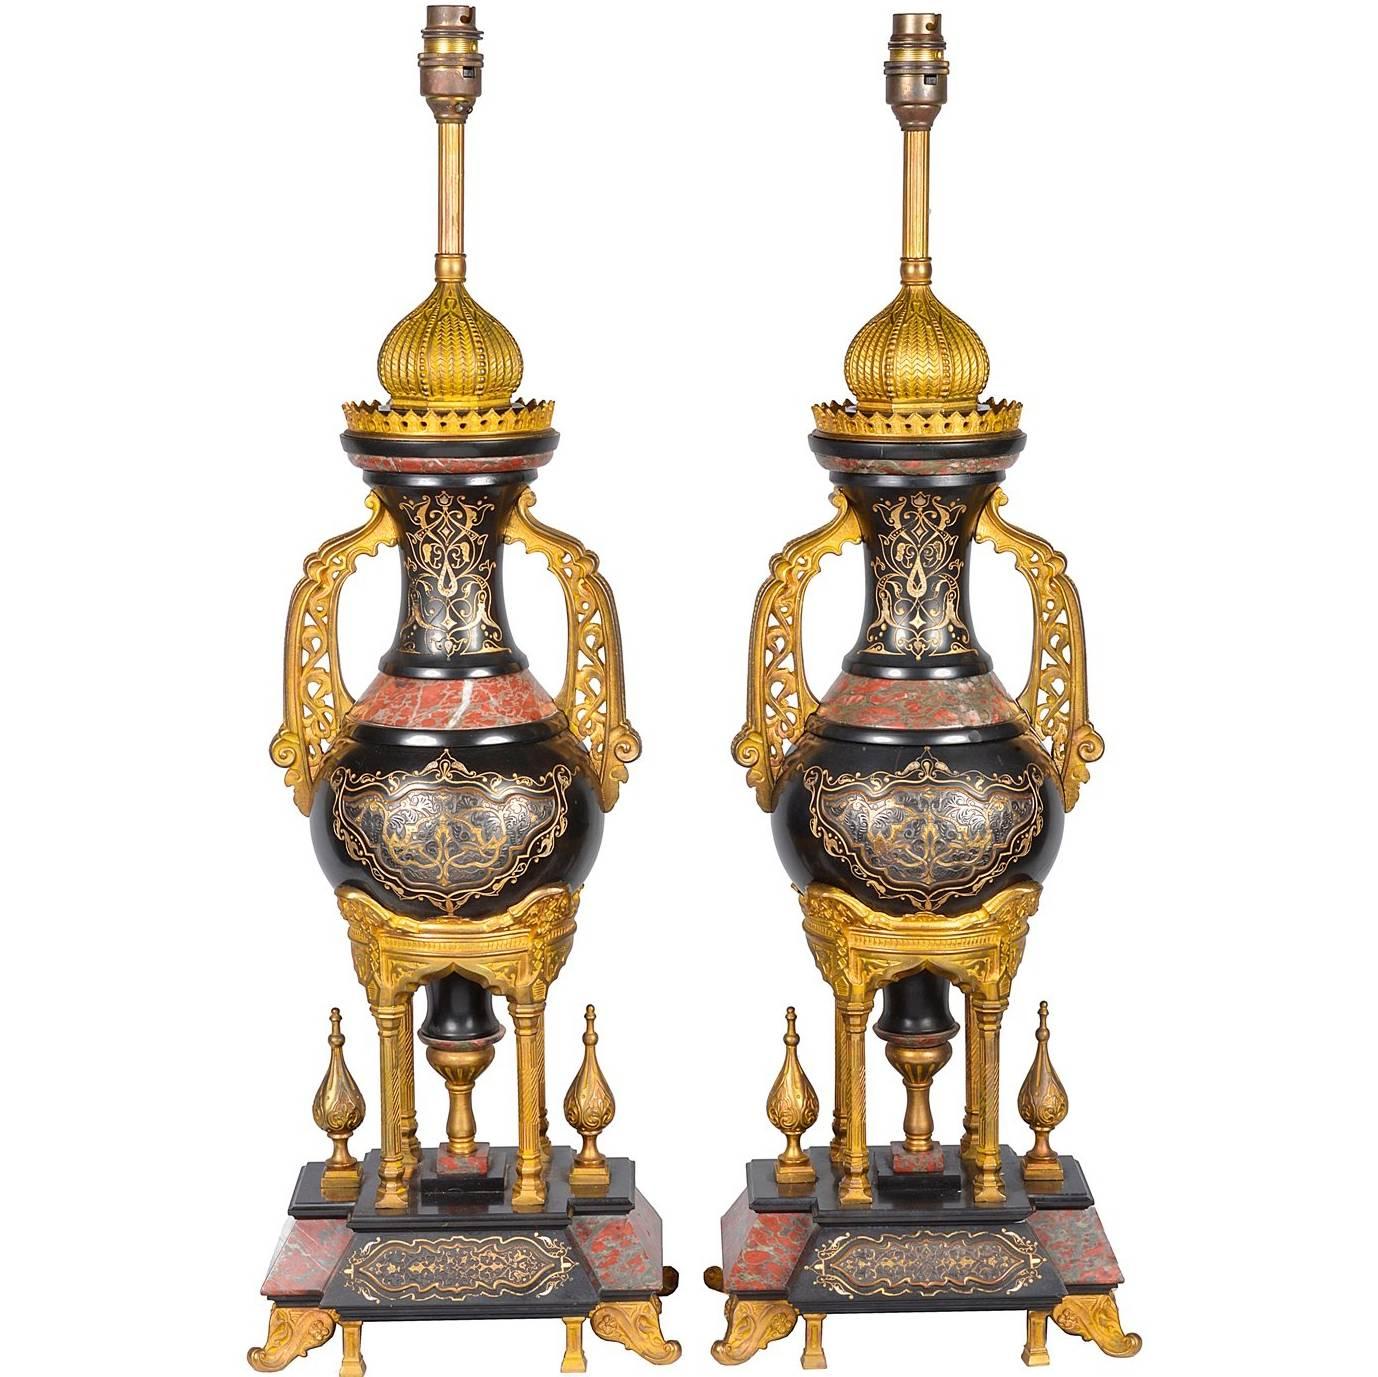 Islamic Influenced 19th Century Lamps